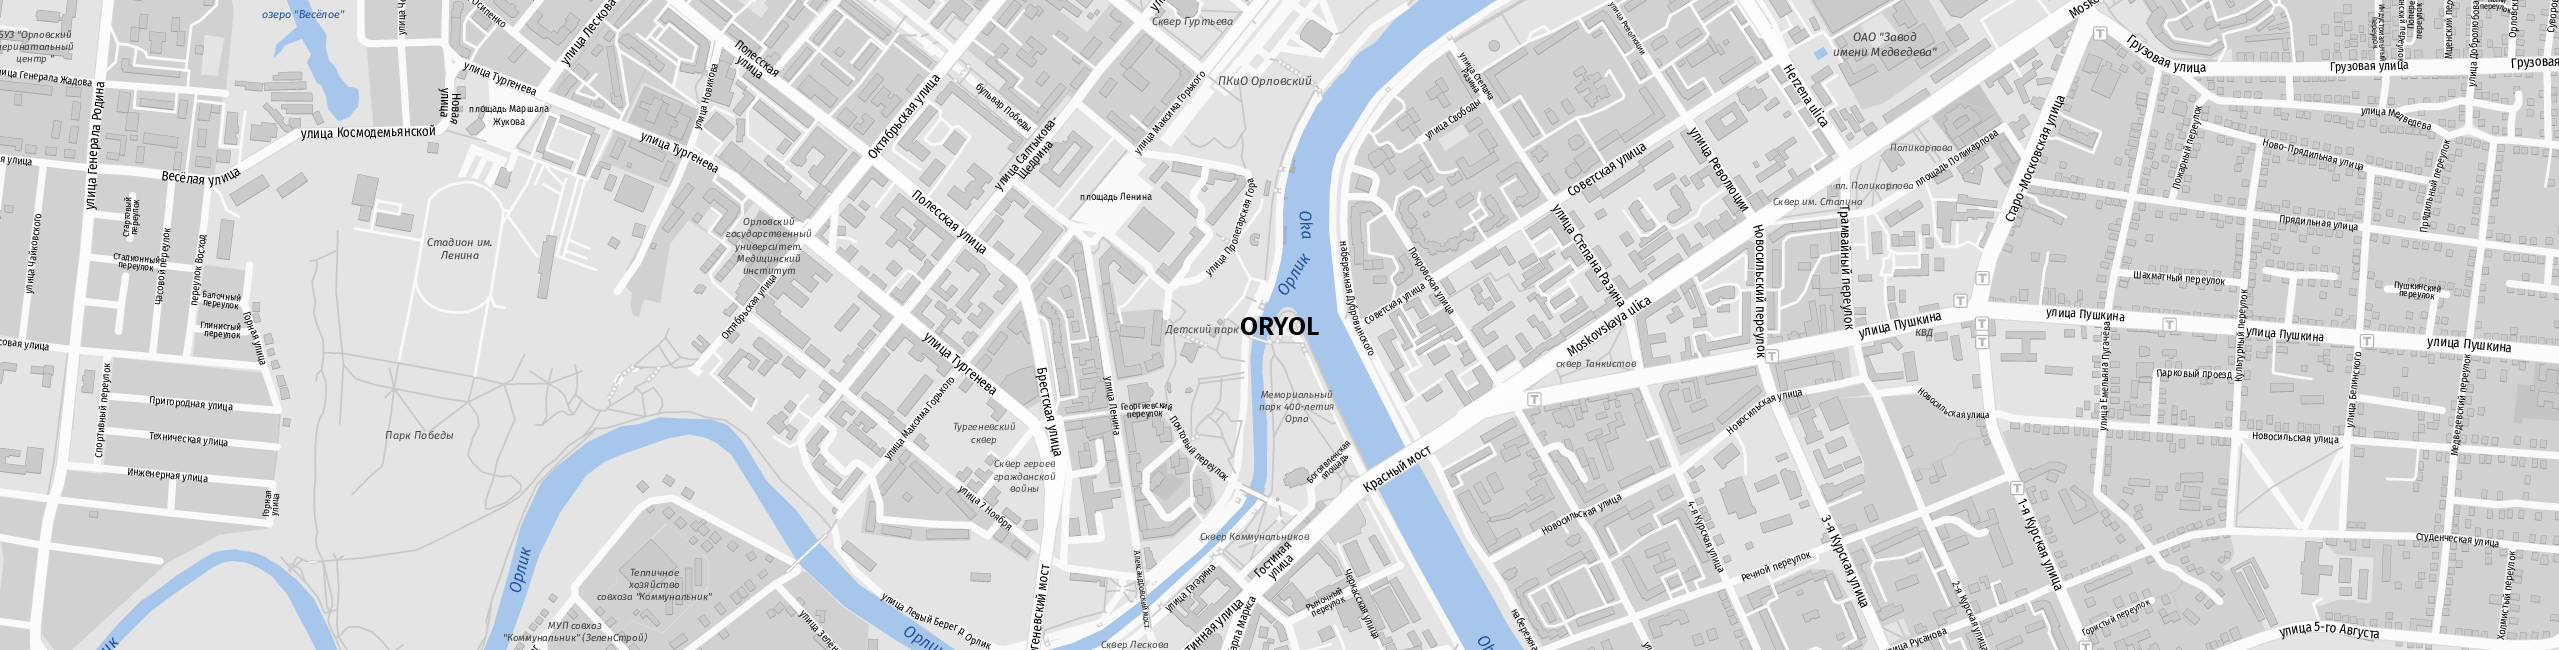 Stadtplan Orjol zum Downloaden.